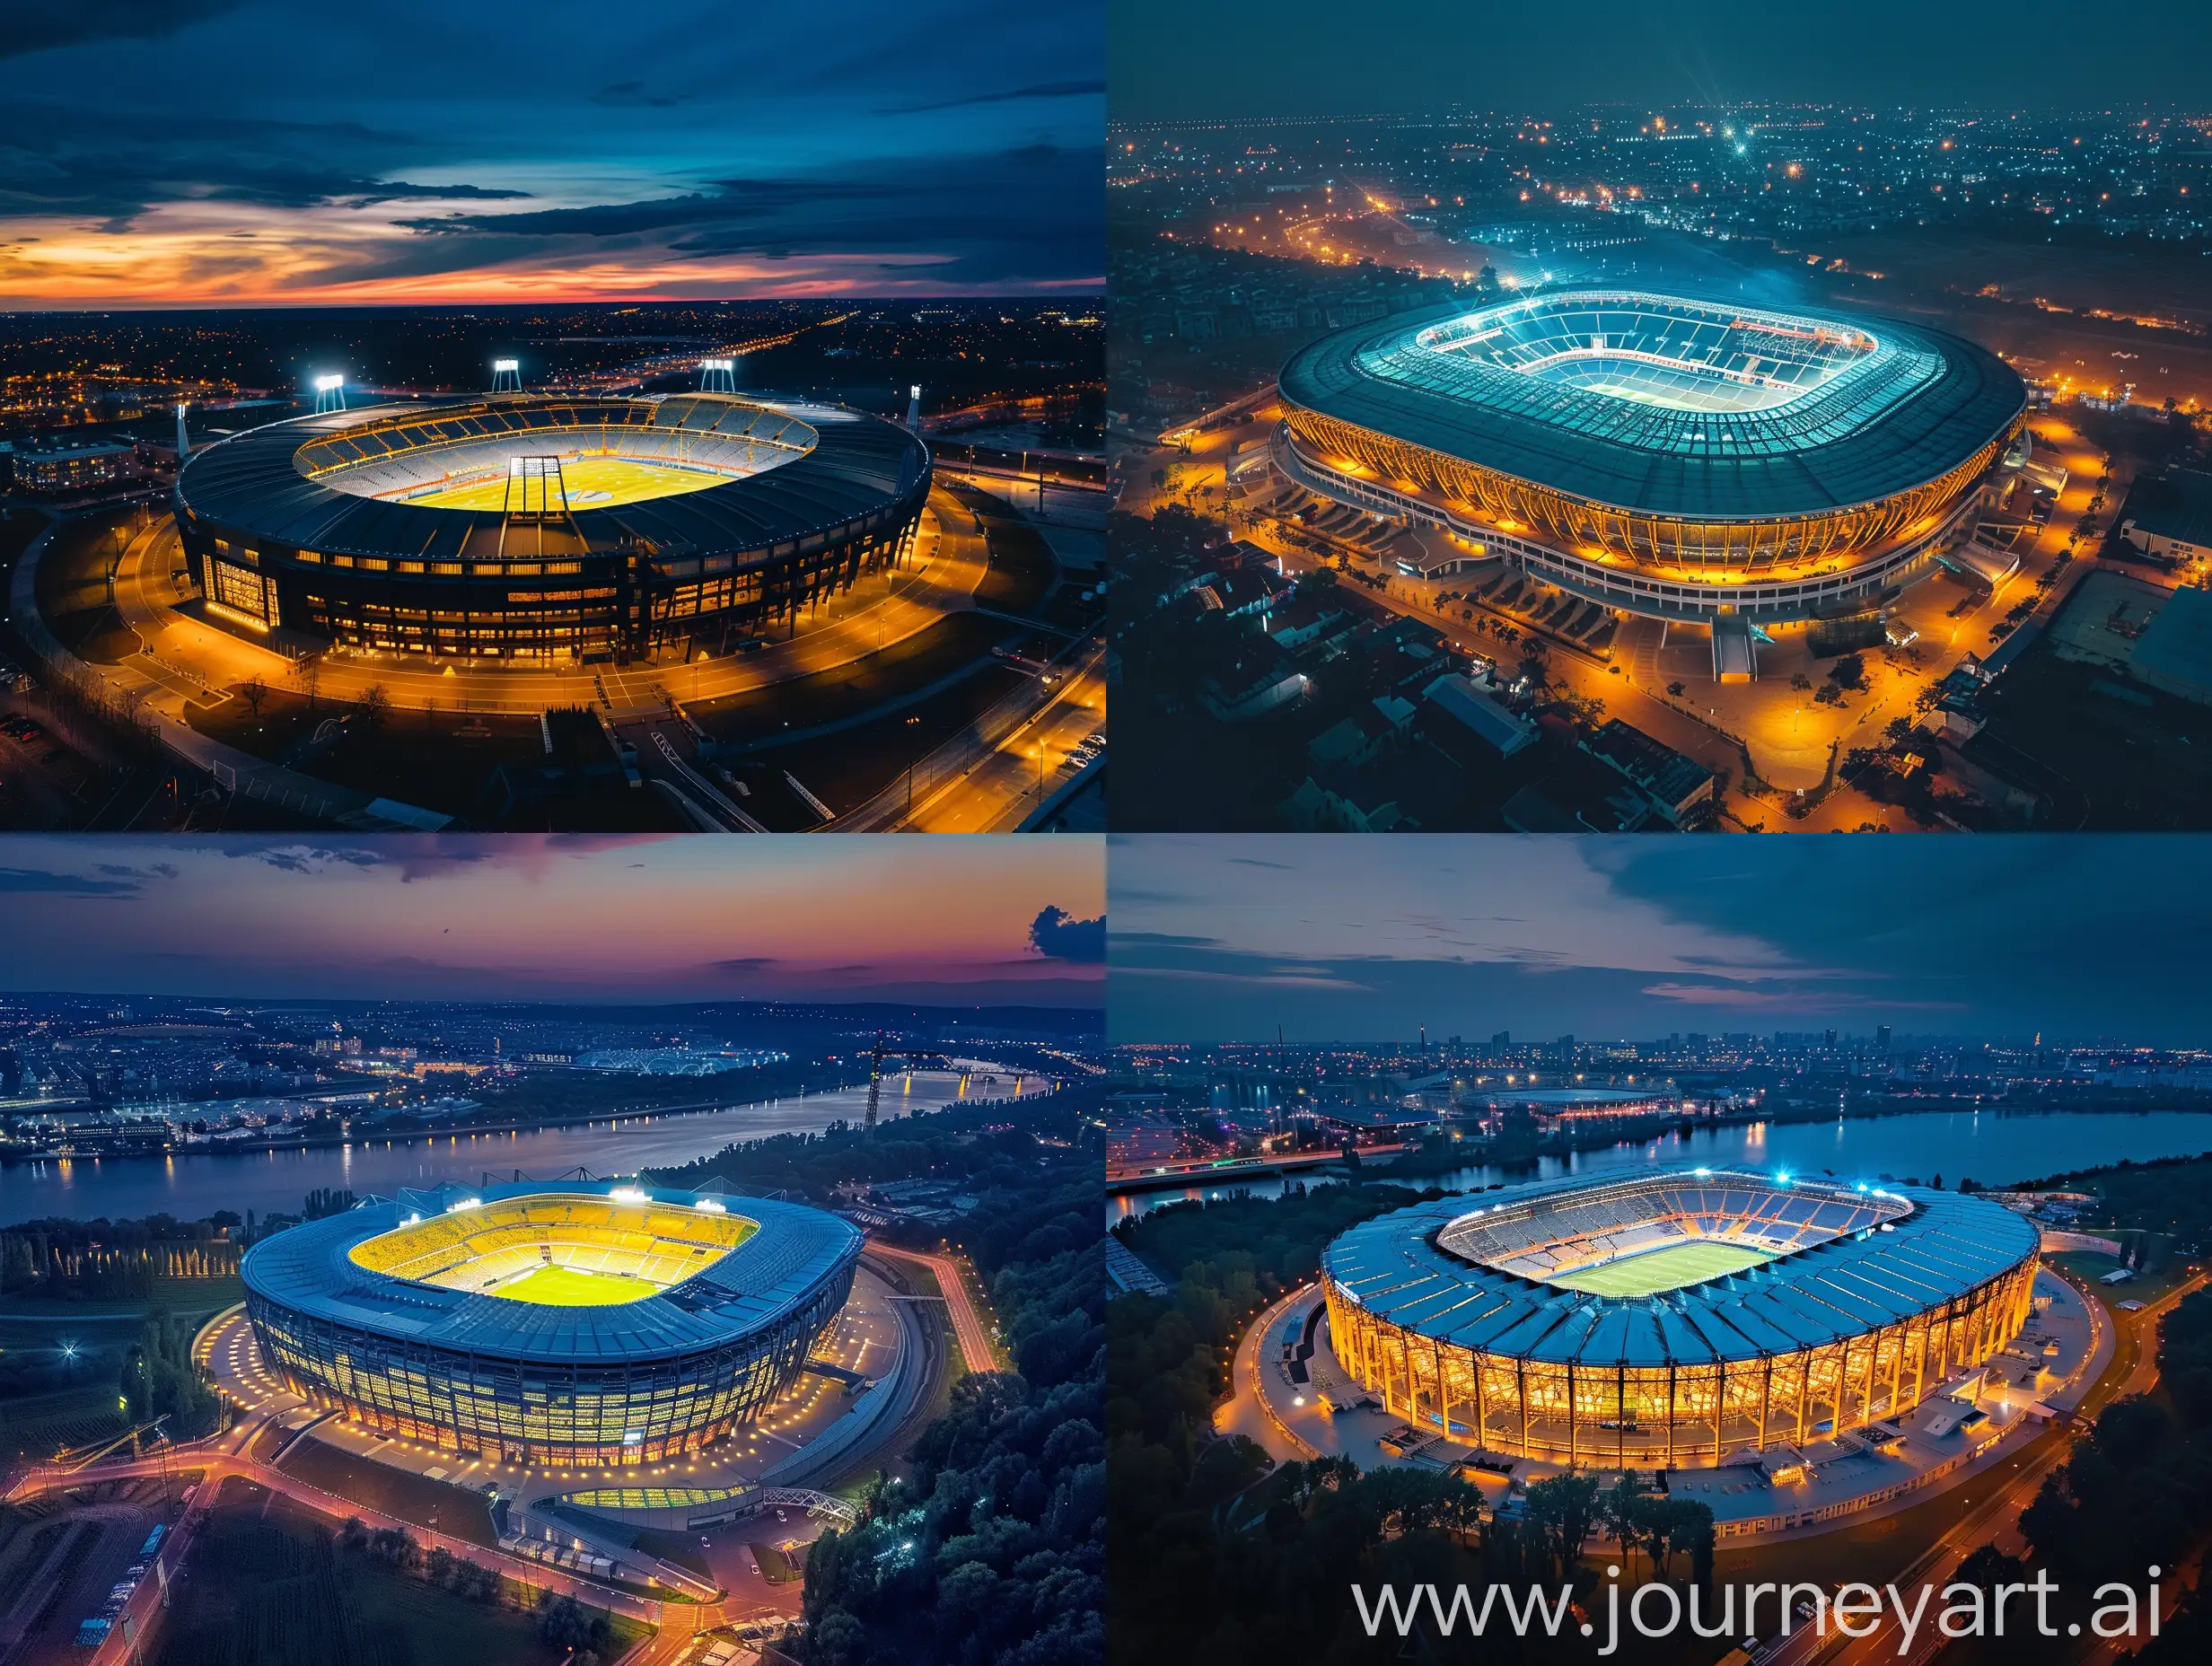 Stadium-Illuminated-at-Night-A-Breathtaking-Aerial-Perspective